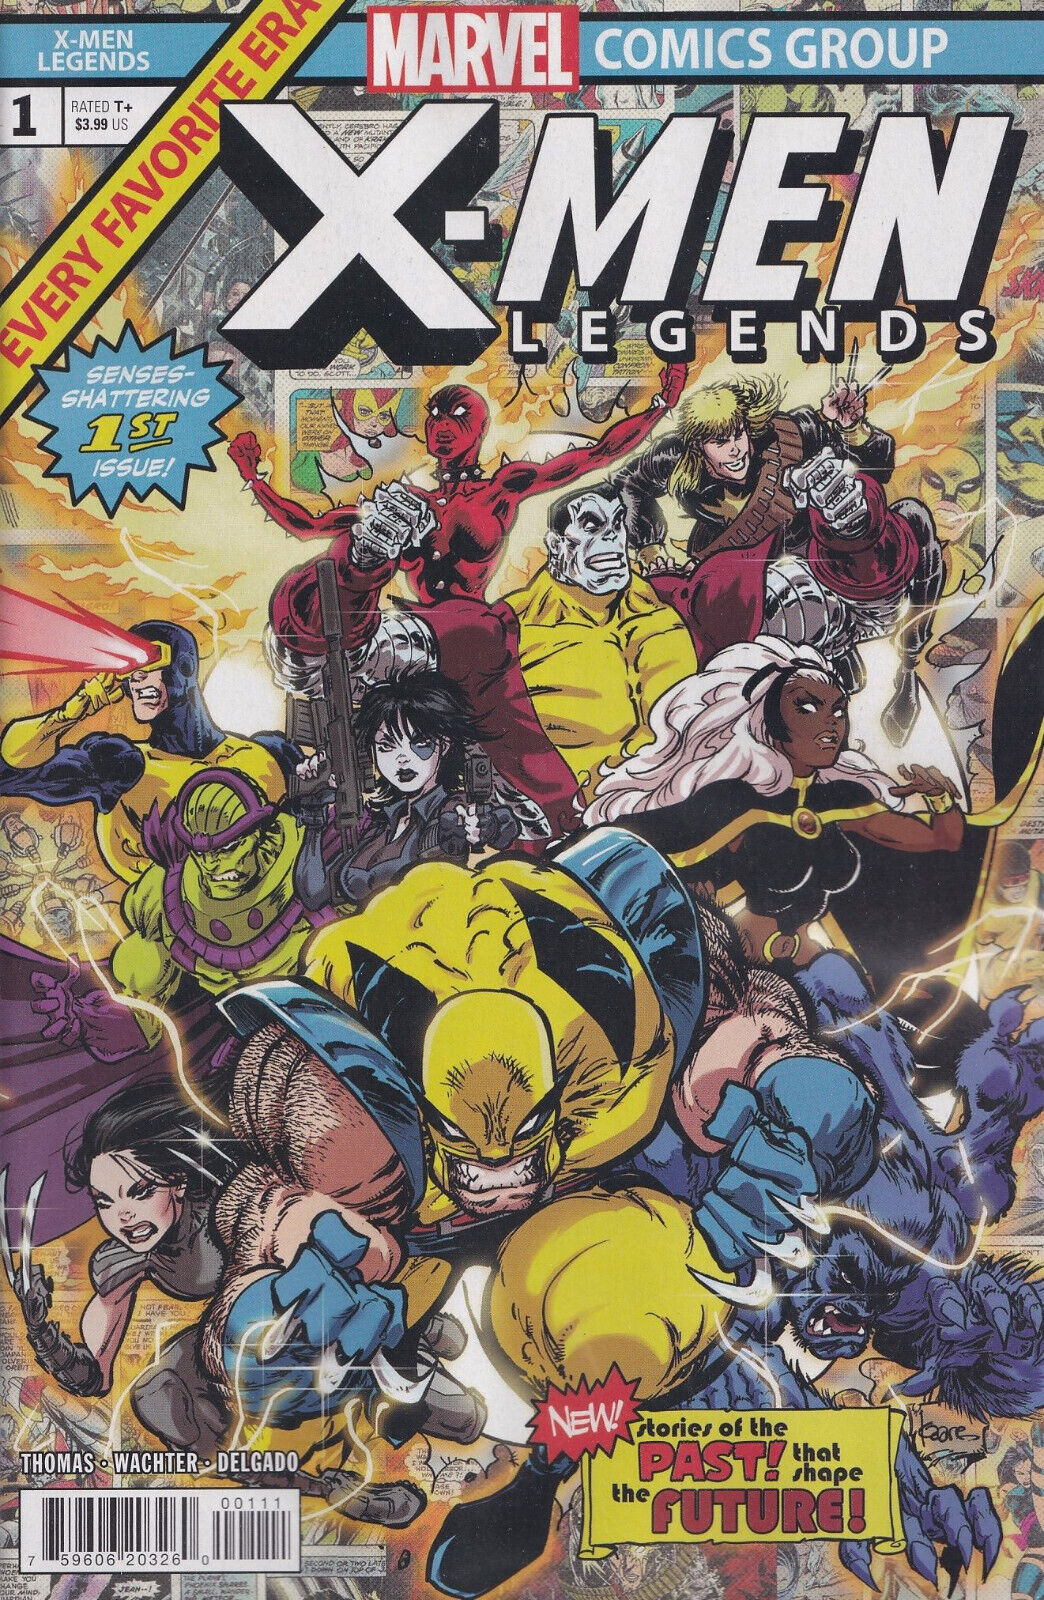 X-MEN LEGENDS #1 (KAARE ANDREWS VARIANT COVER) COMIC BOOK ~ Marvel Comics